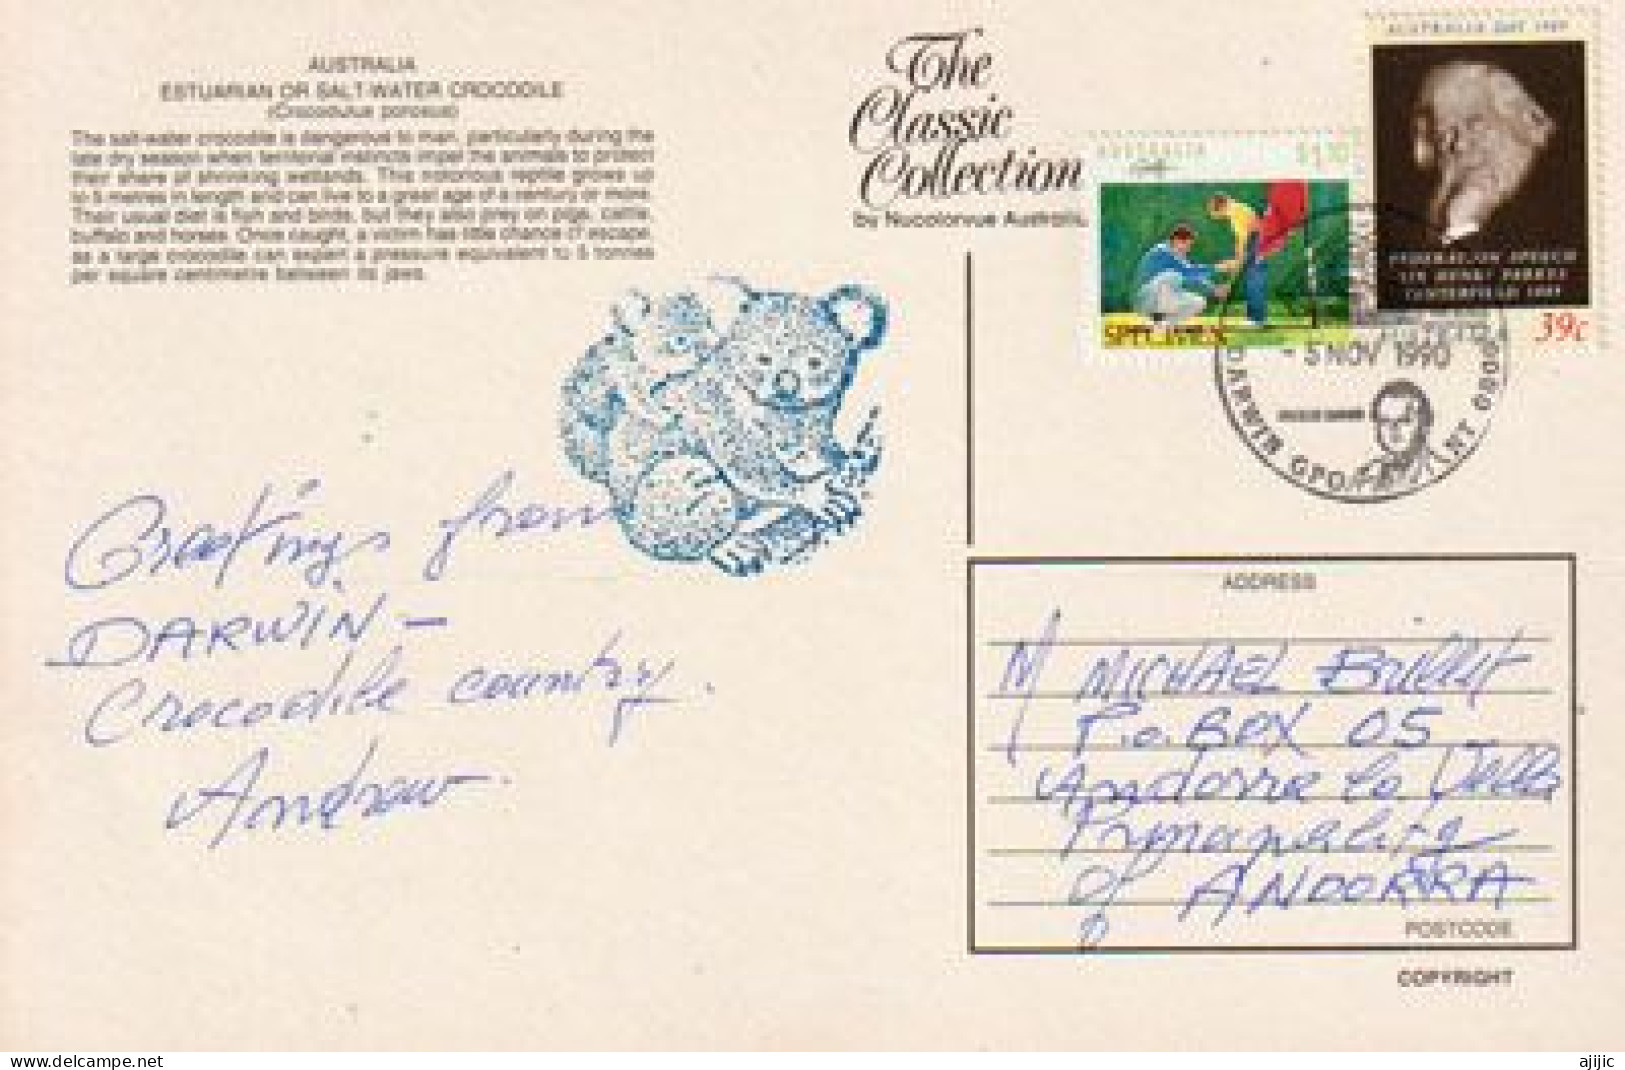 Greetings From DARWIN,  The Crocodiles Country, Postcard To Andorra, From DARWIN  NT (1990) 2 Pics - Kakadu